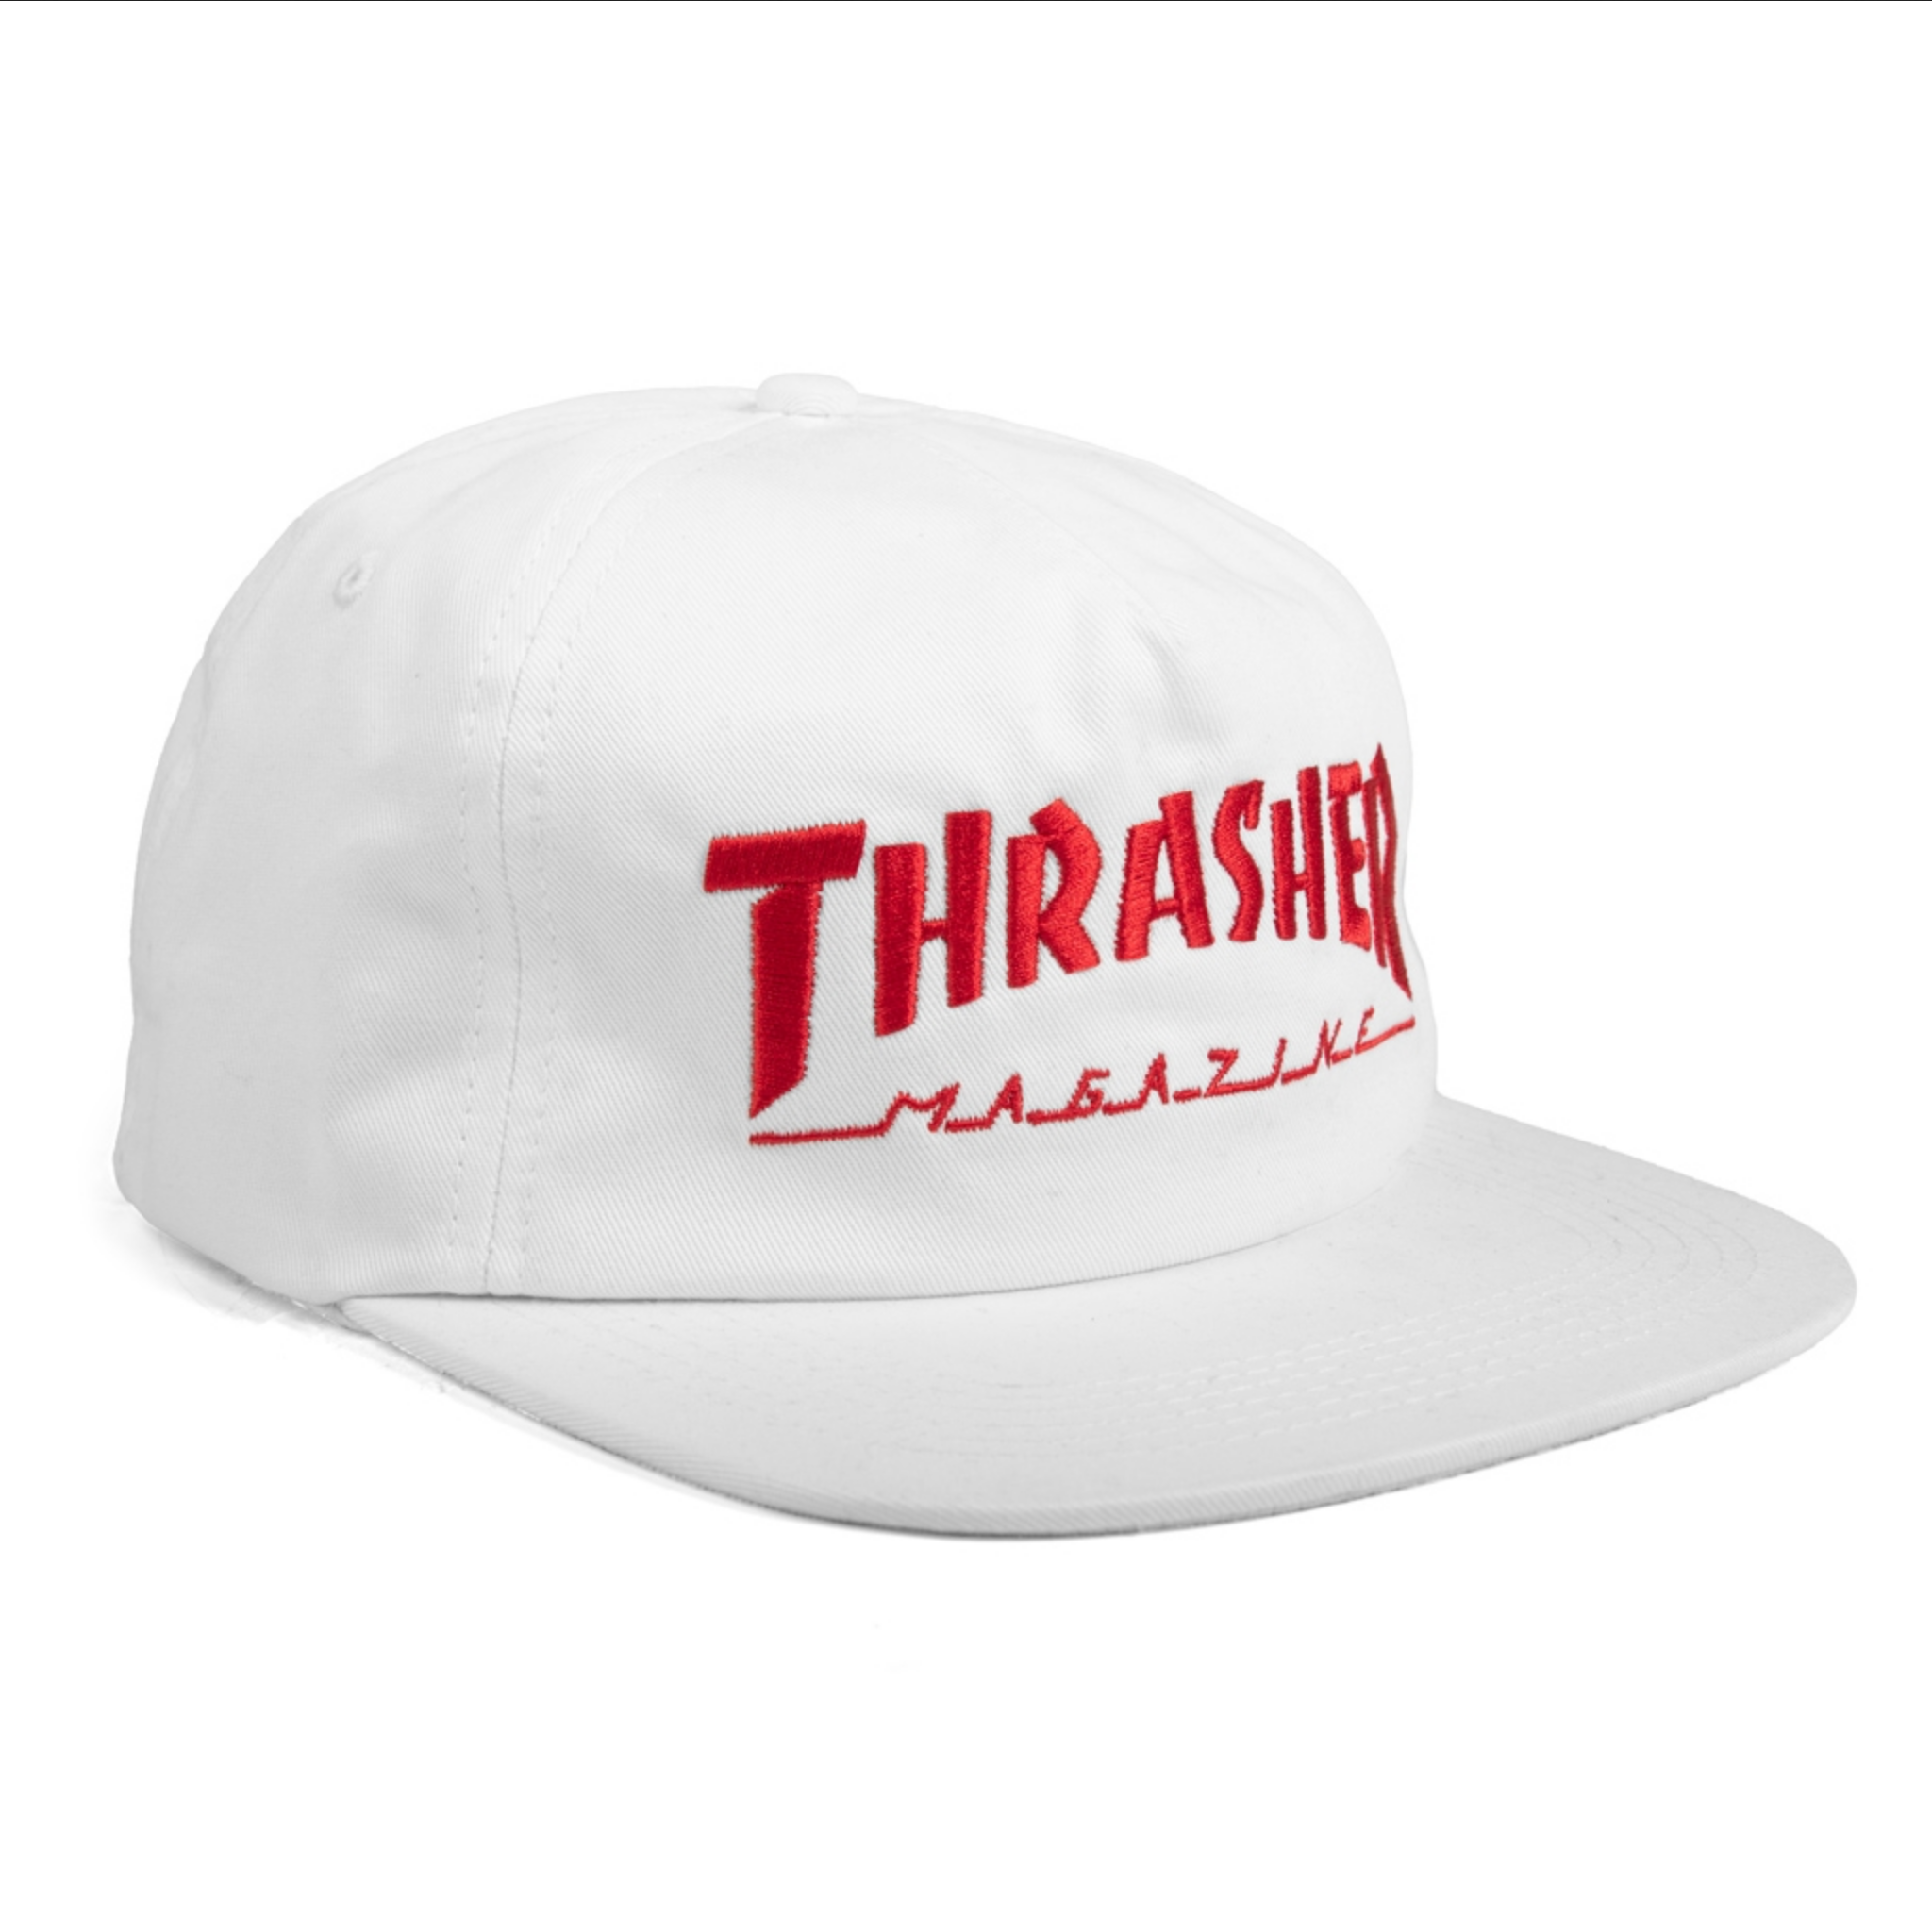 Thrasher Mag. Mag Logo Snapback White